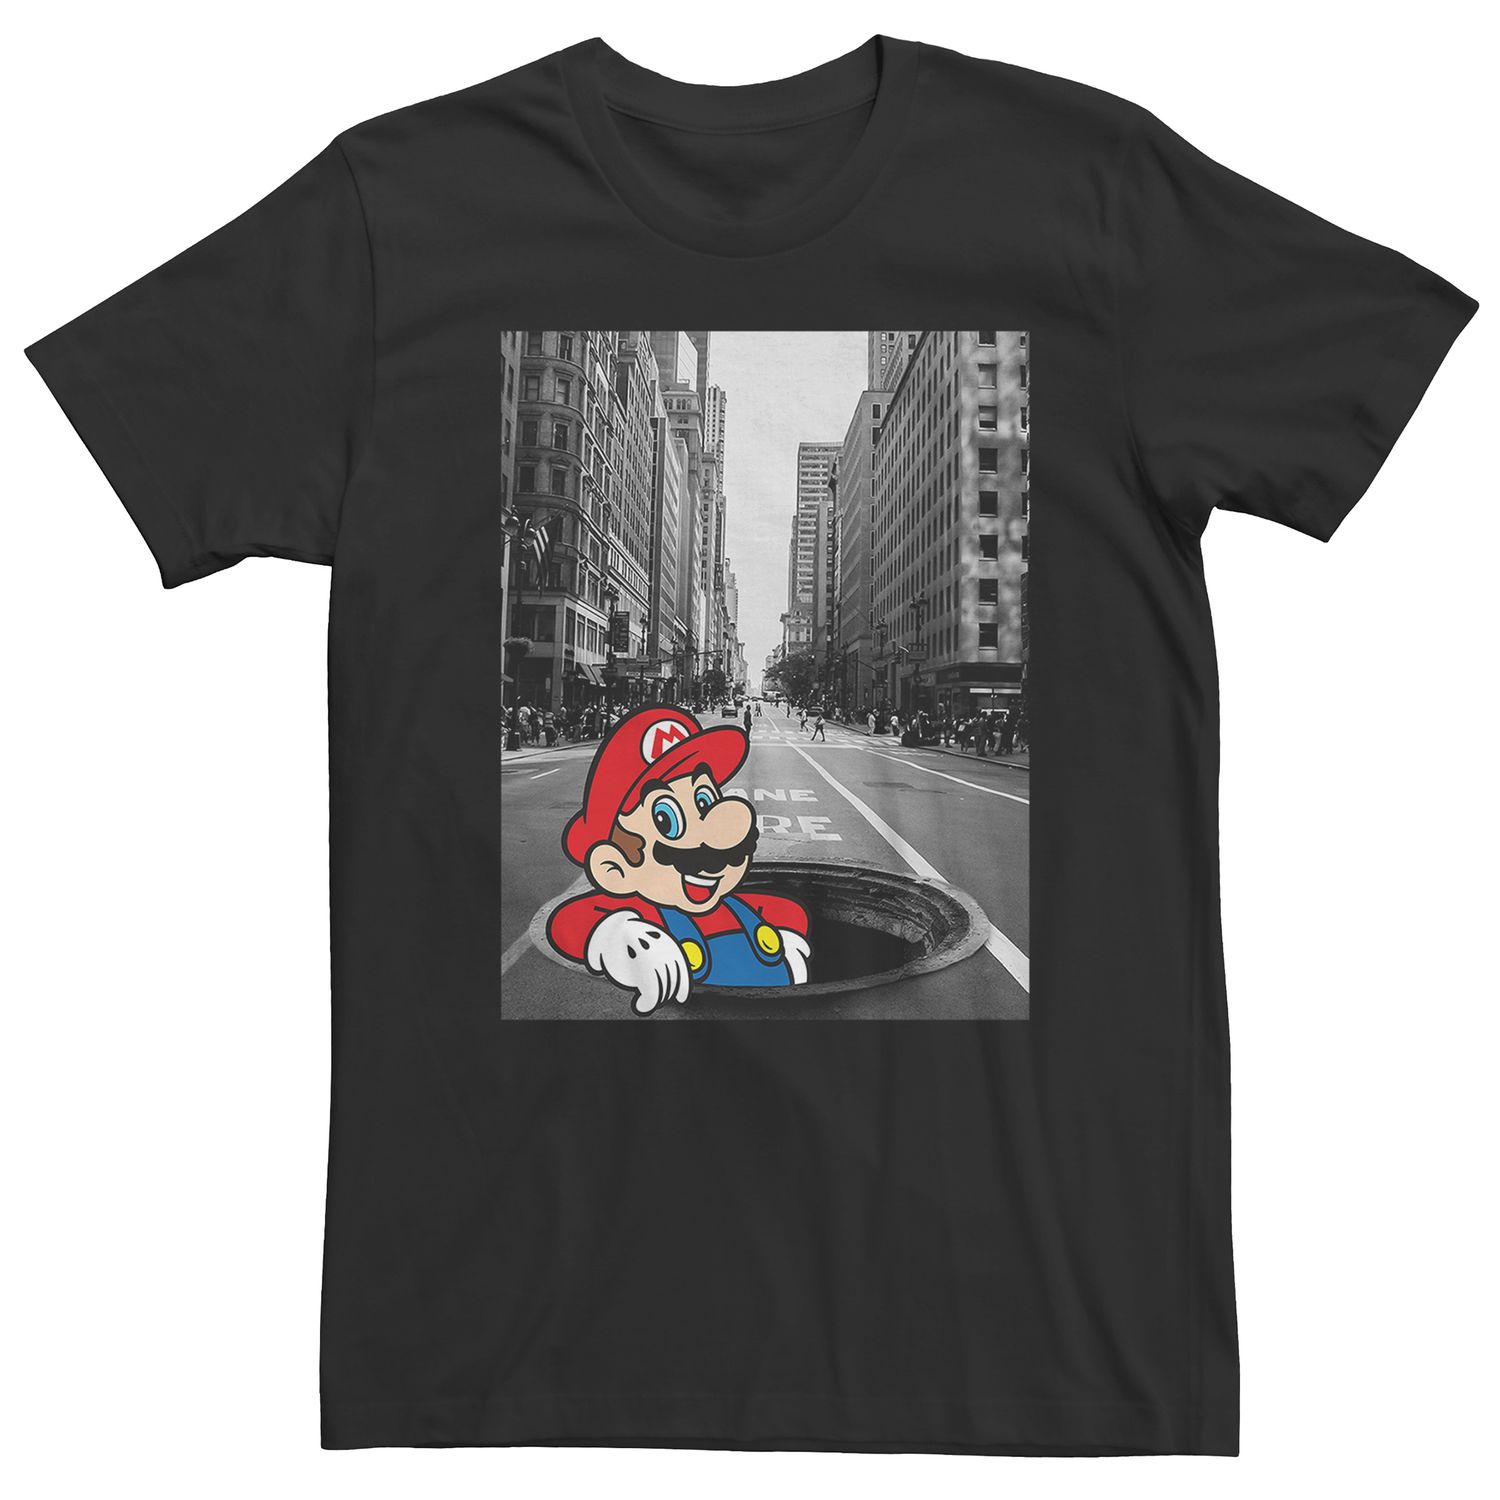 Мужская футболка Nintendo Super Mario Licensed Character мужская классическая раскрашенная футболка nintendo super mario keep it licensed character